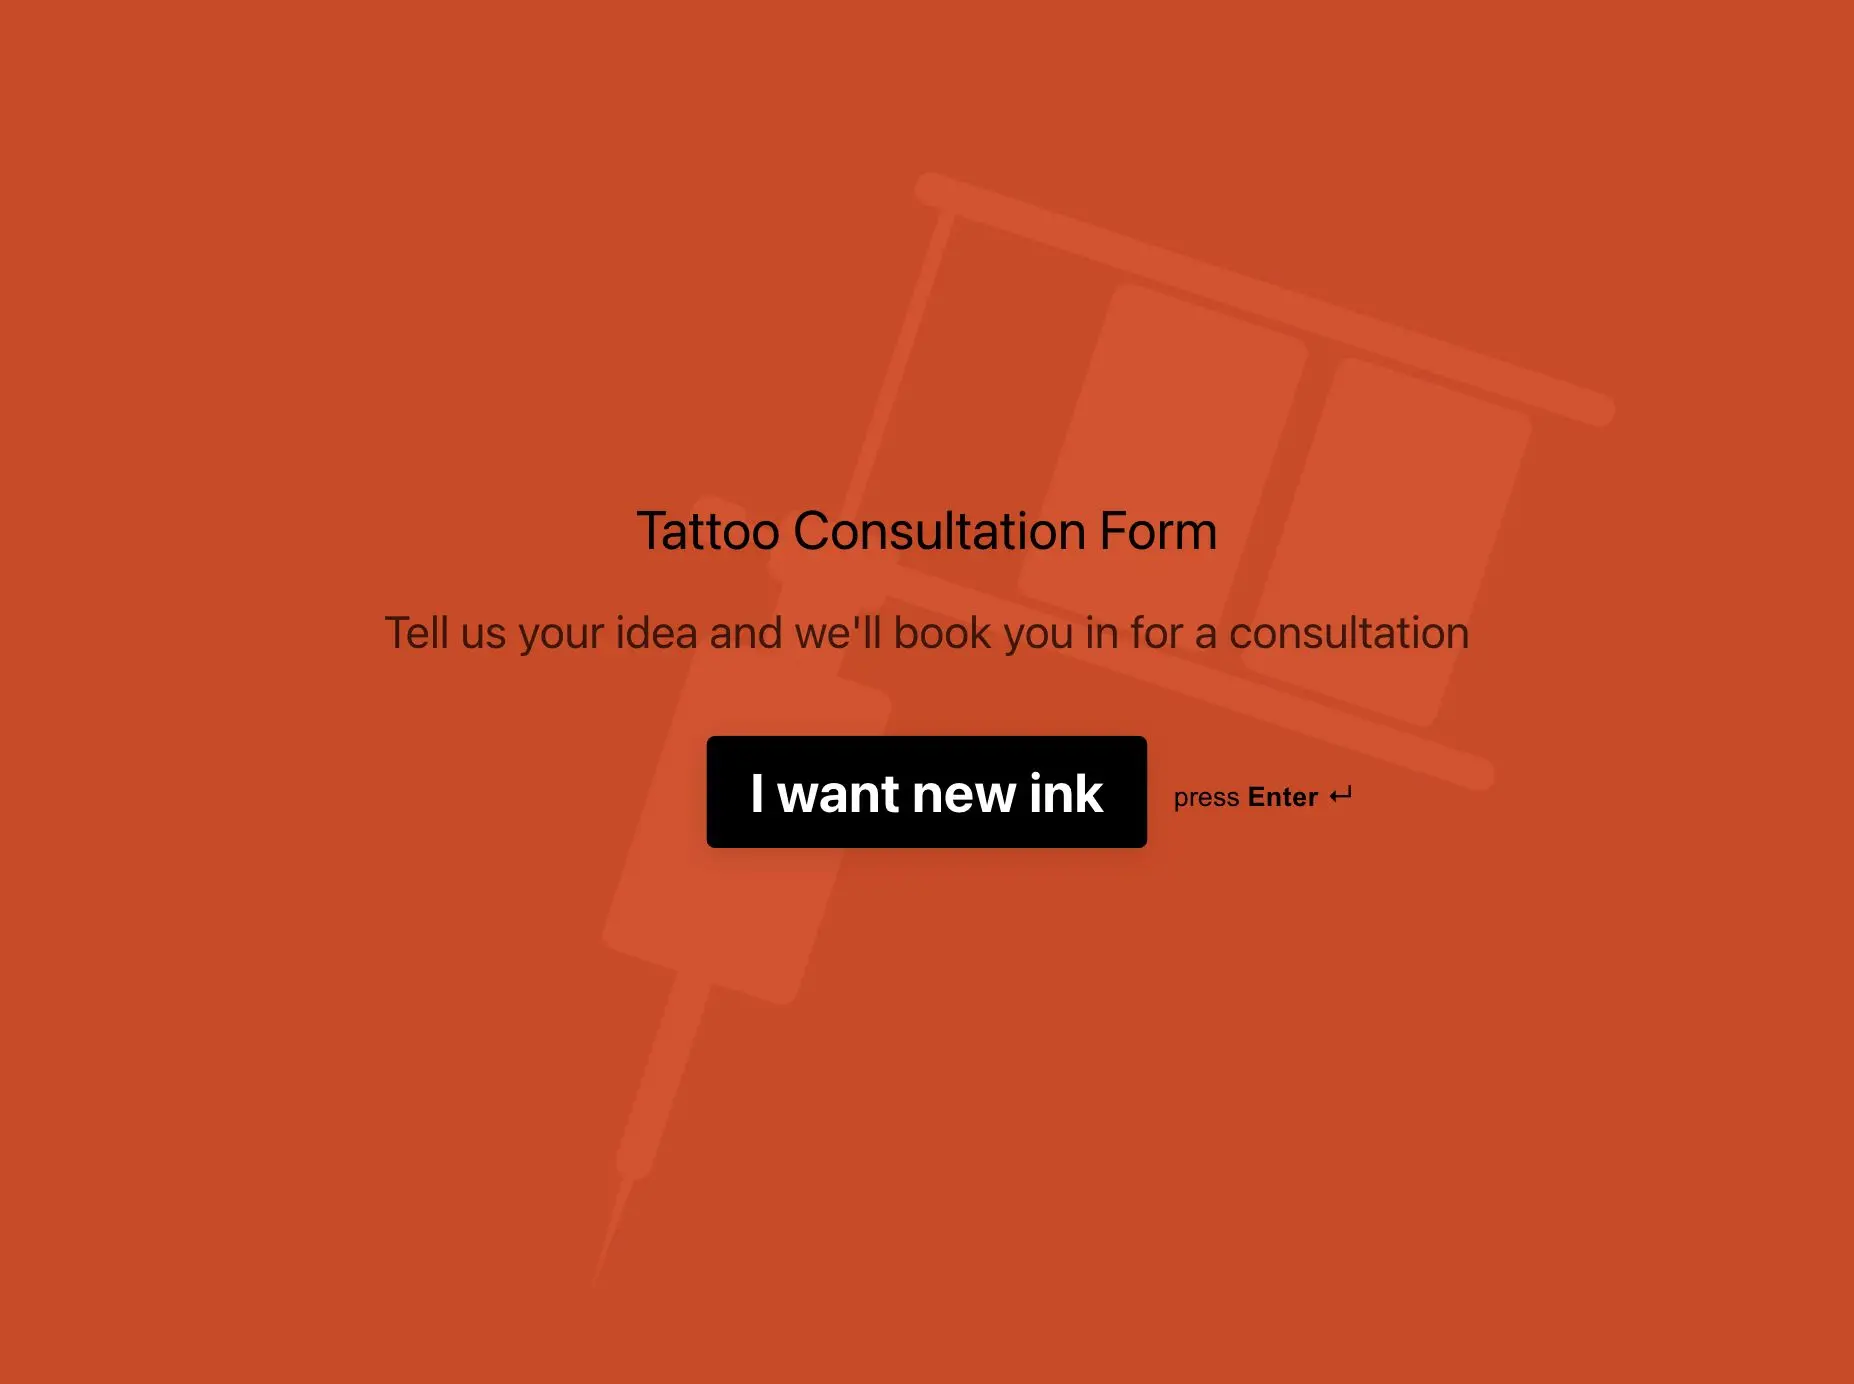 Tattoo Consultation Form Template Hero